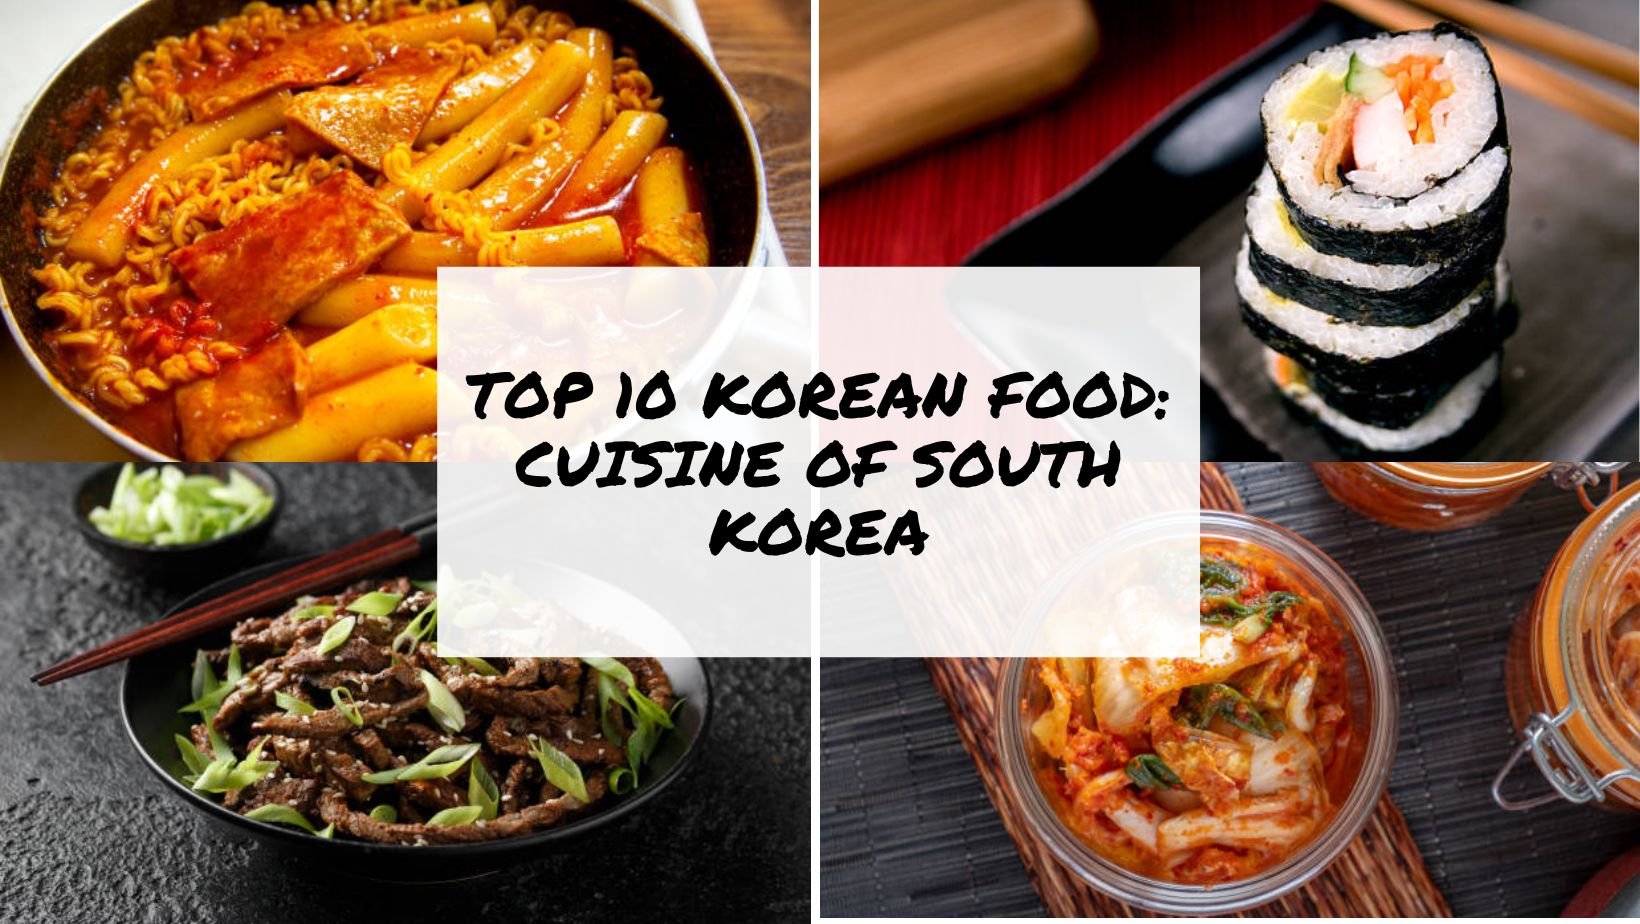 TOP 10 KOREAN FOOD CUISINE OF SOUTH KOREA